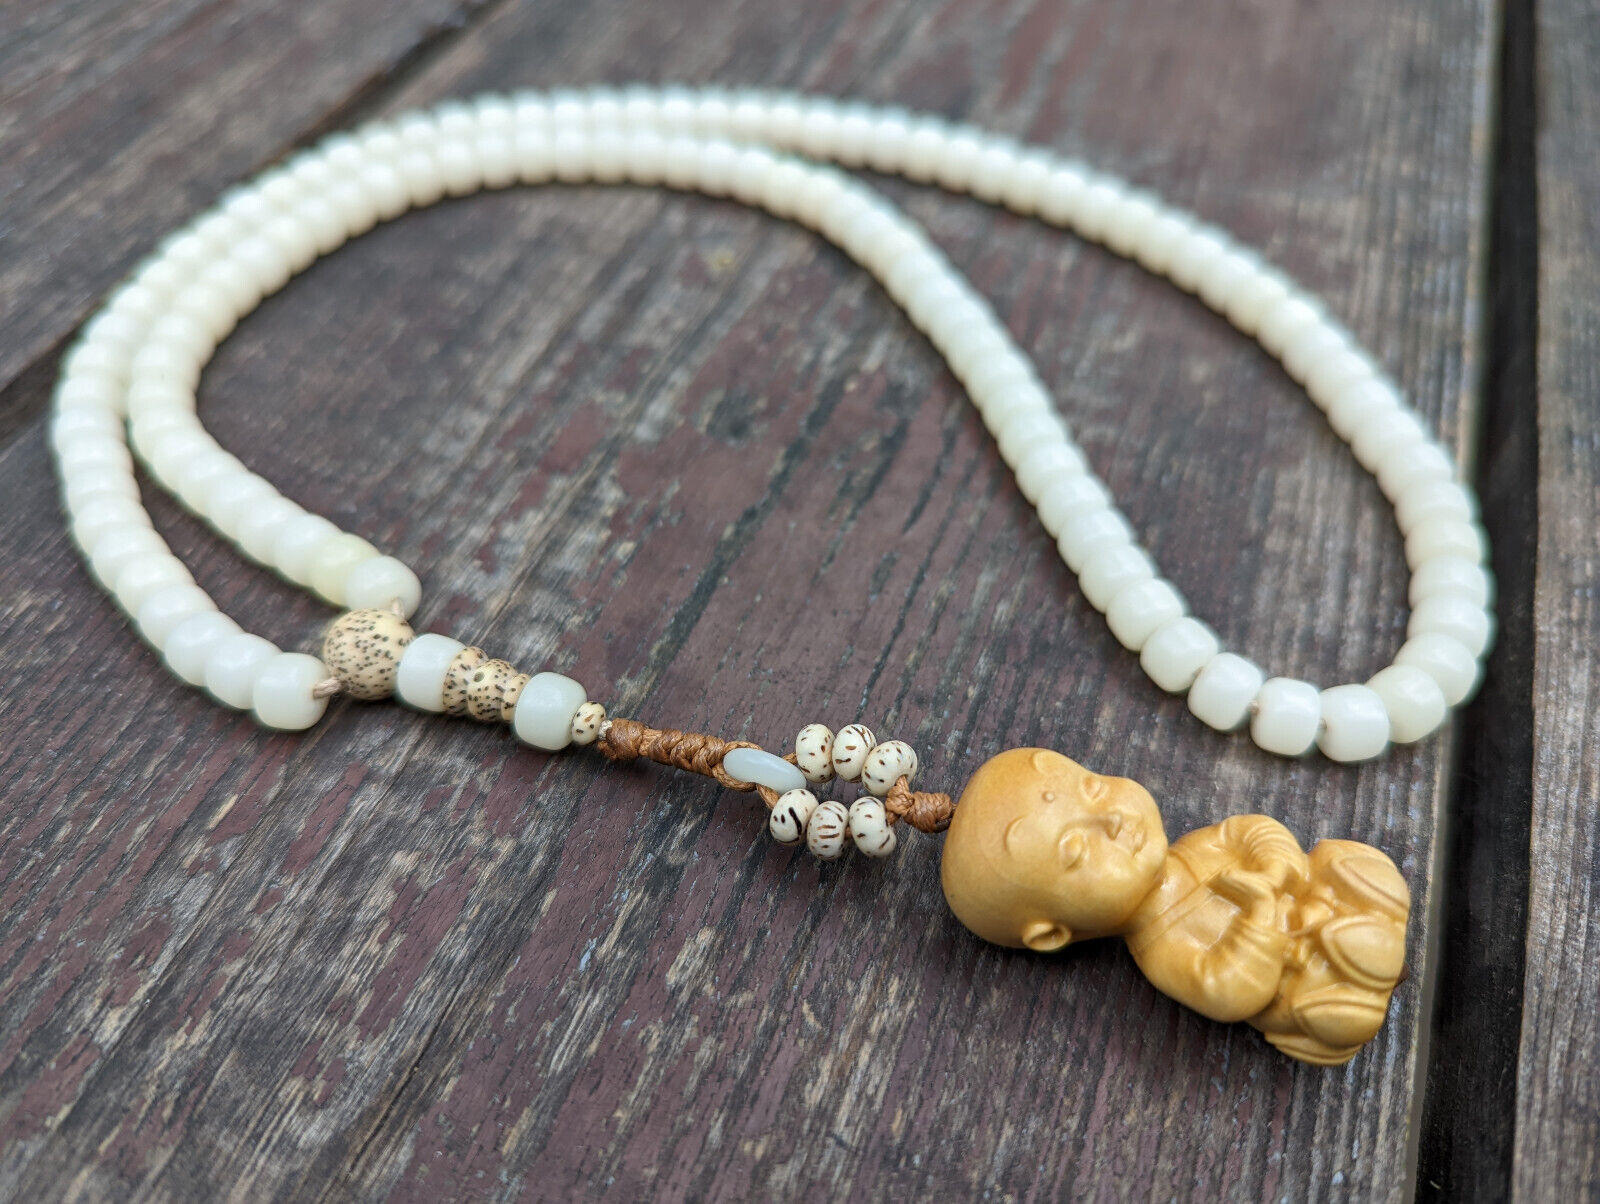 White Bodhi Root Tibetan Mala Prayer Necklace 108 Meditation Beads Little Buddha